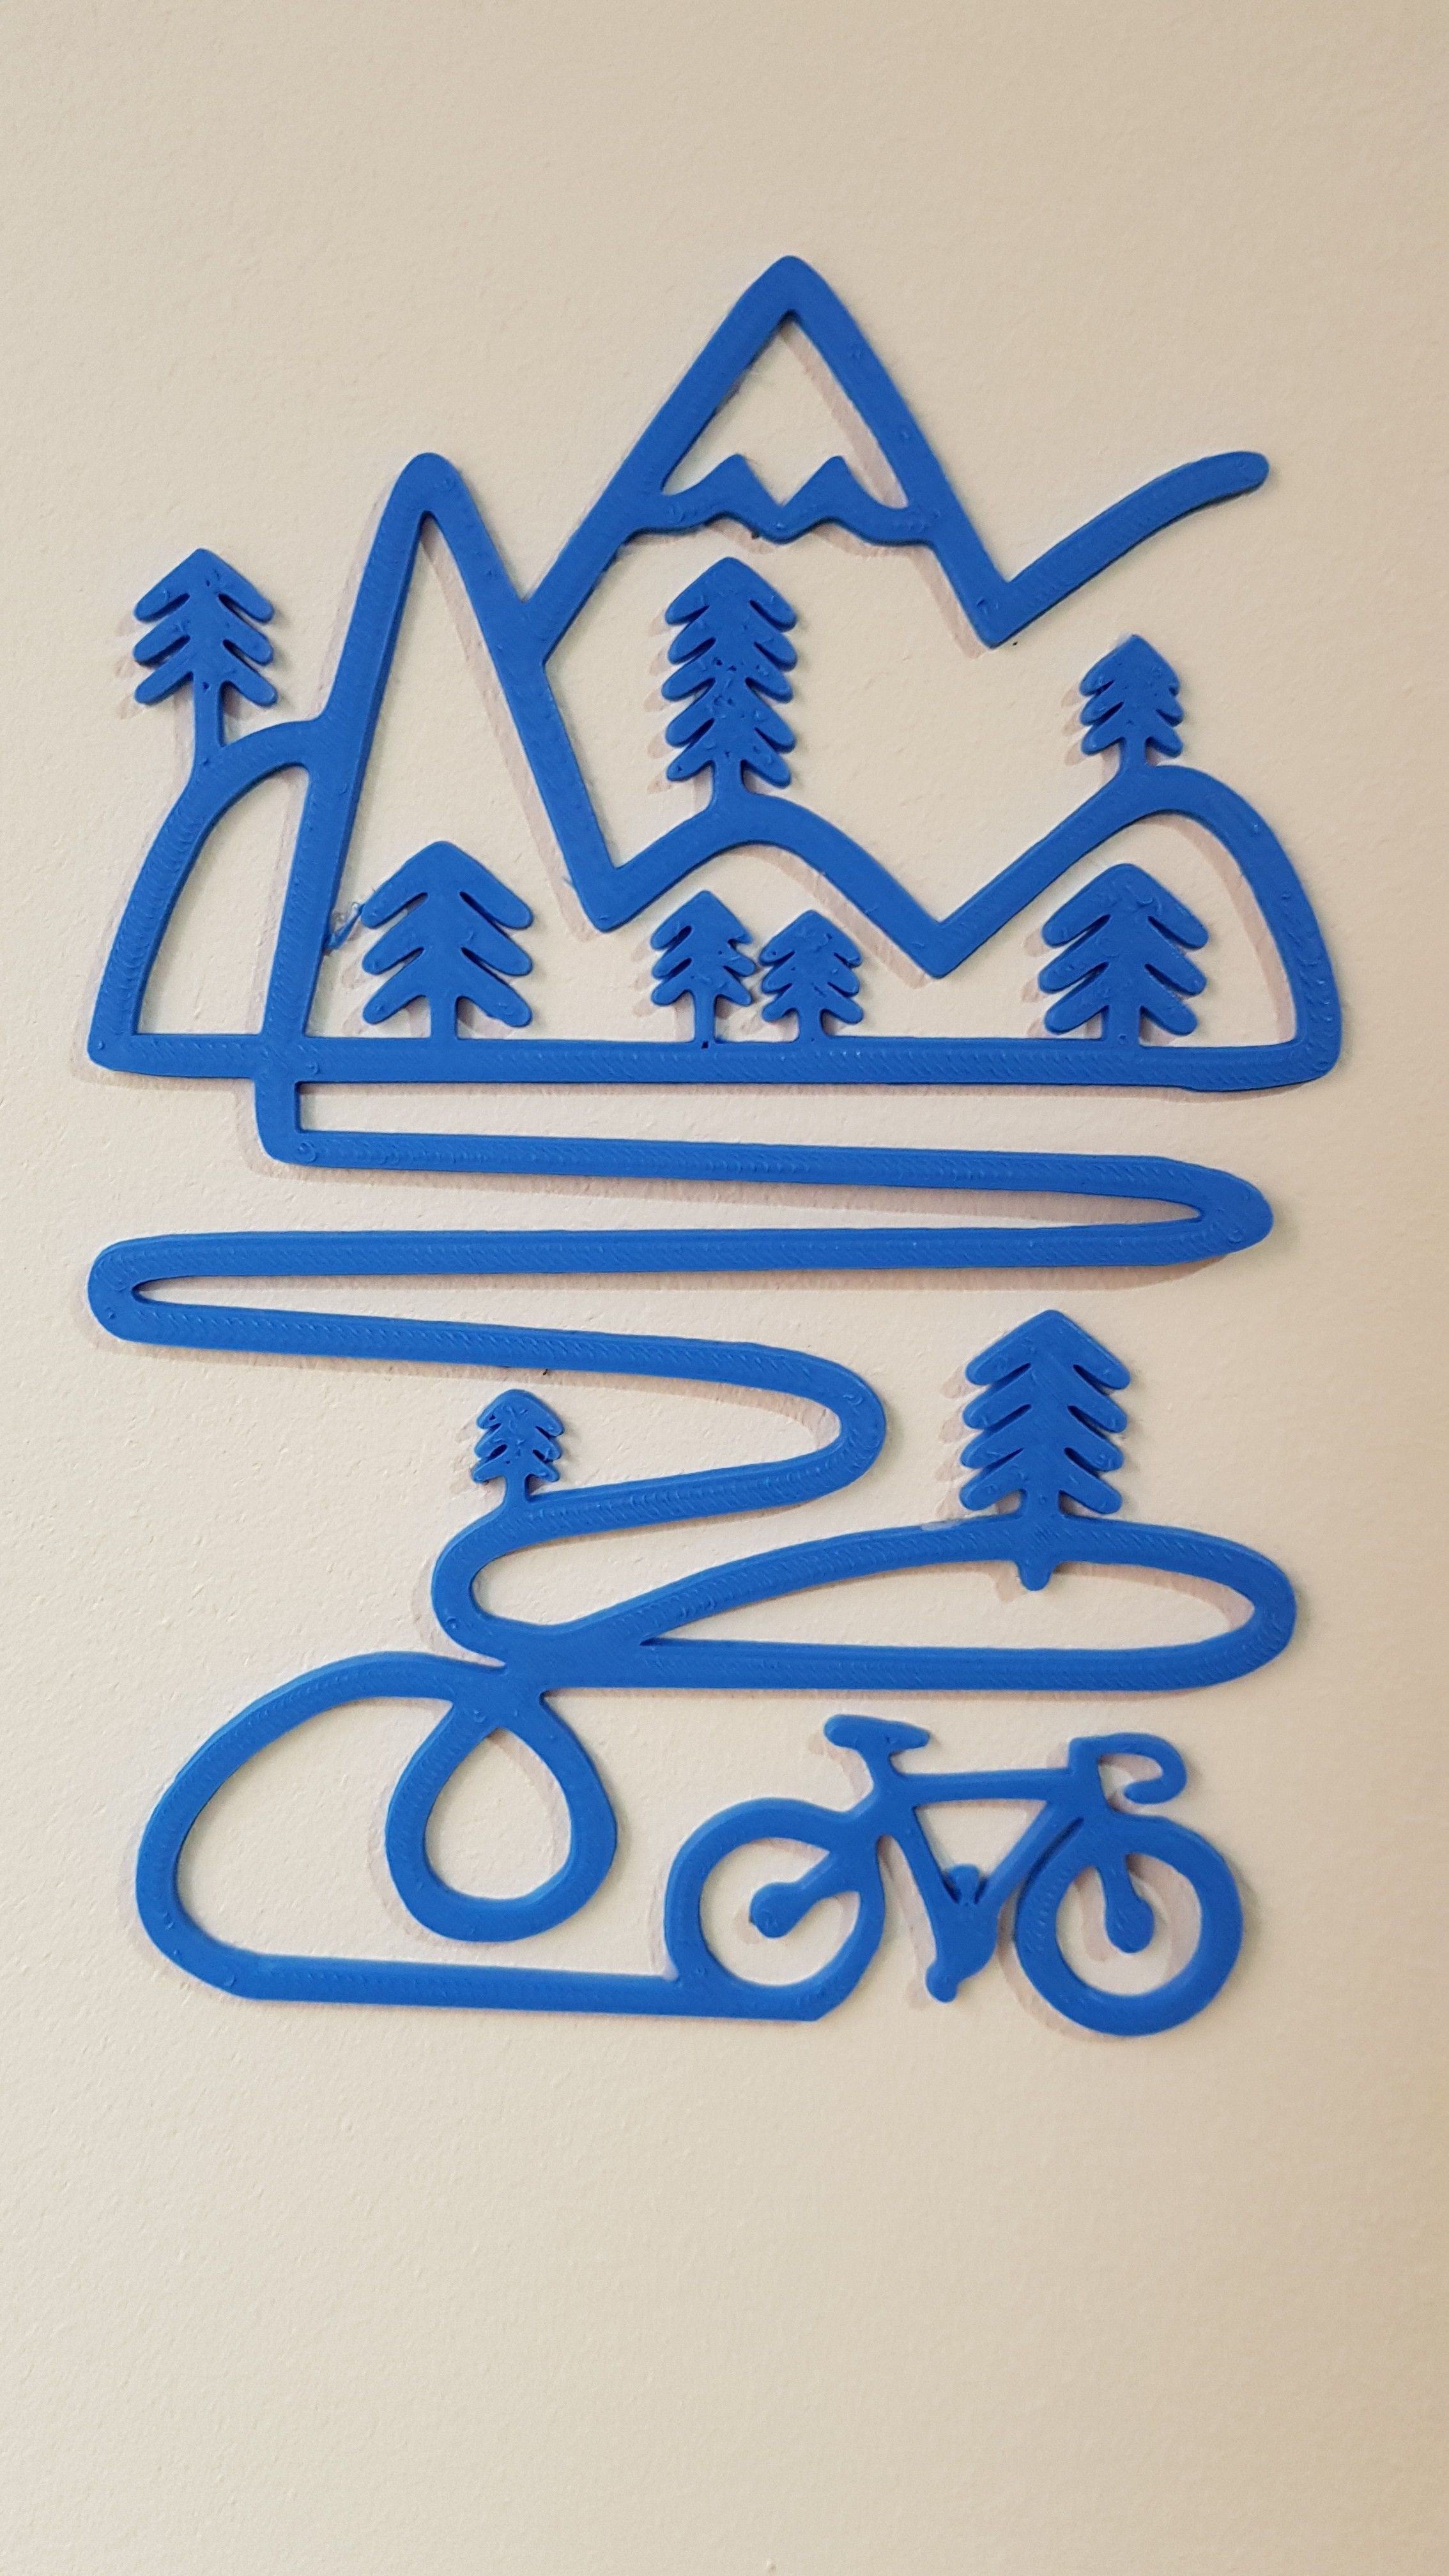 20180413_192533.jpg Download STL file mountain bike wall decor • 3D printable design, solunkejagruti